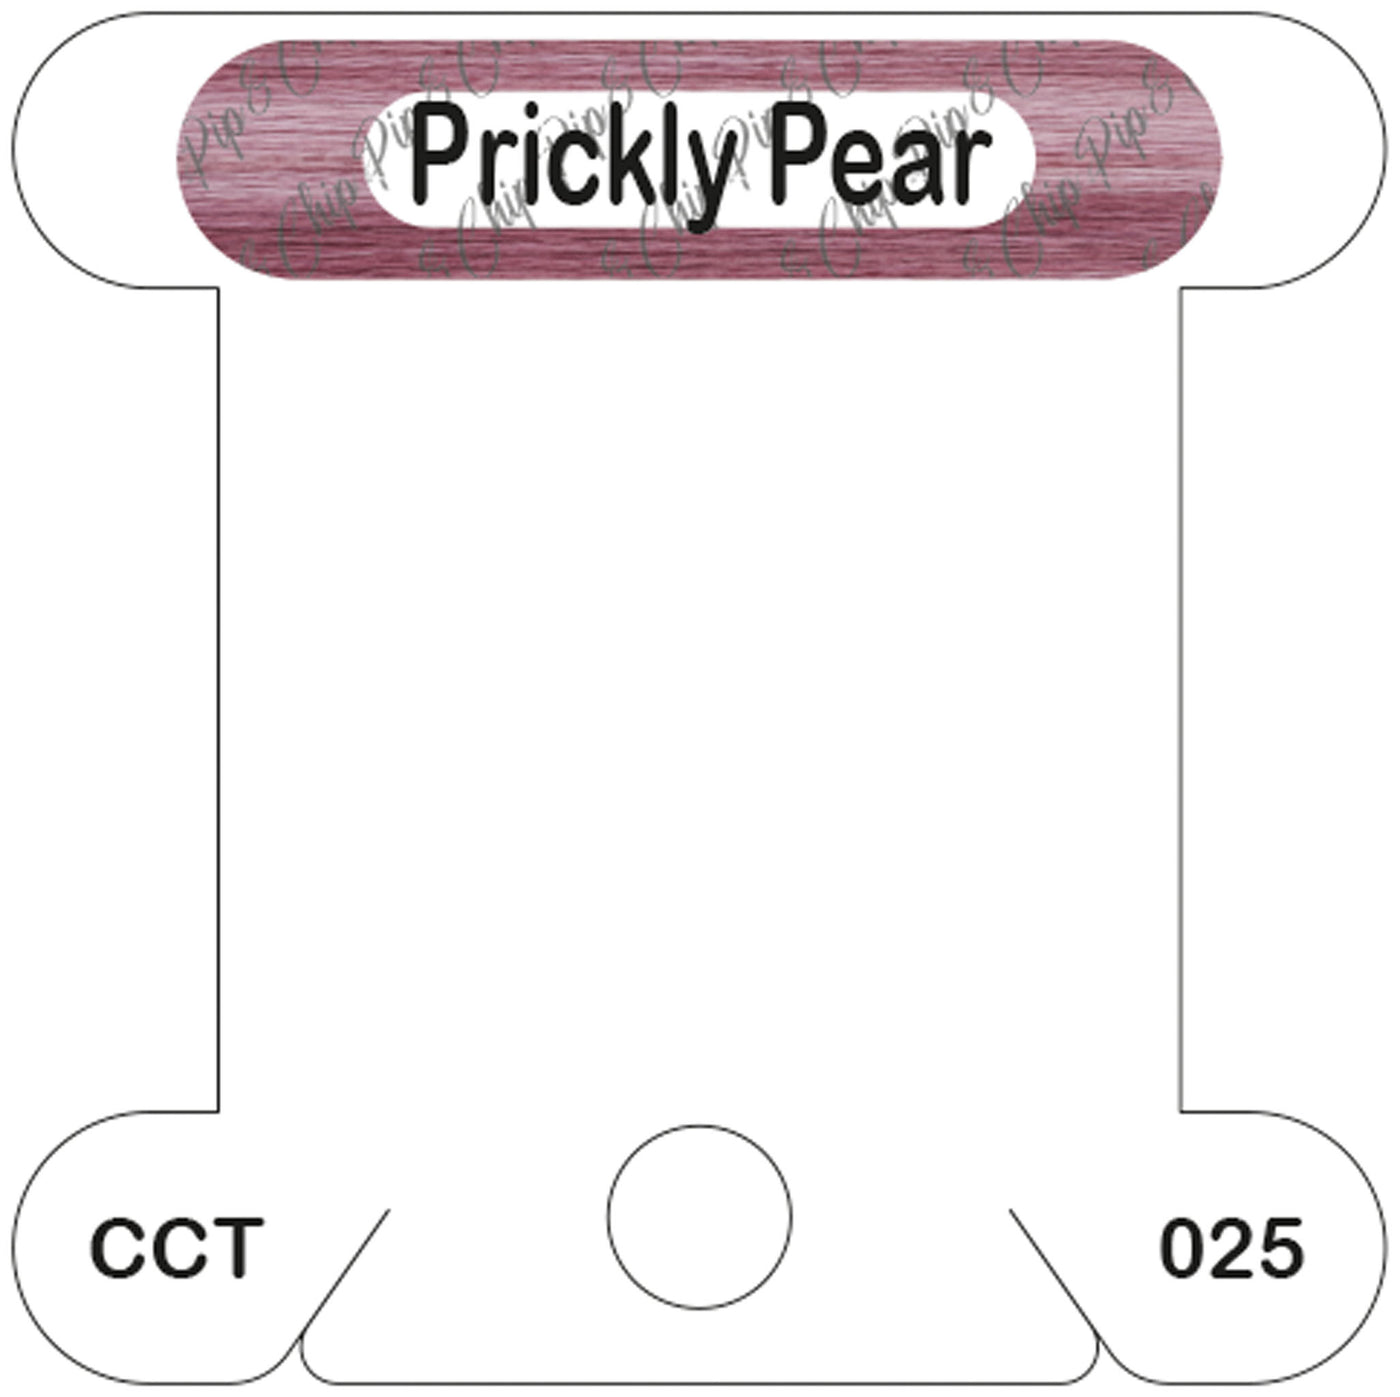 Classic Colorworks Prickly Pear acrylic bobbin